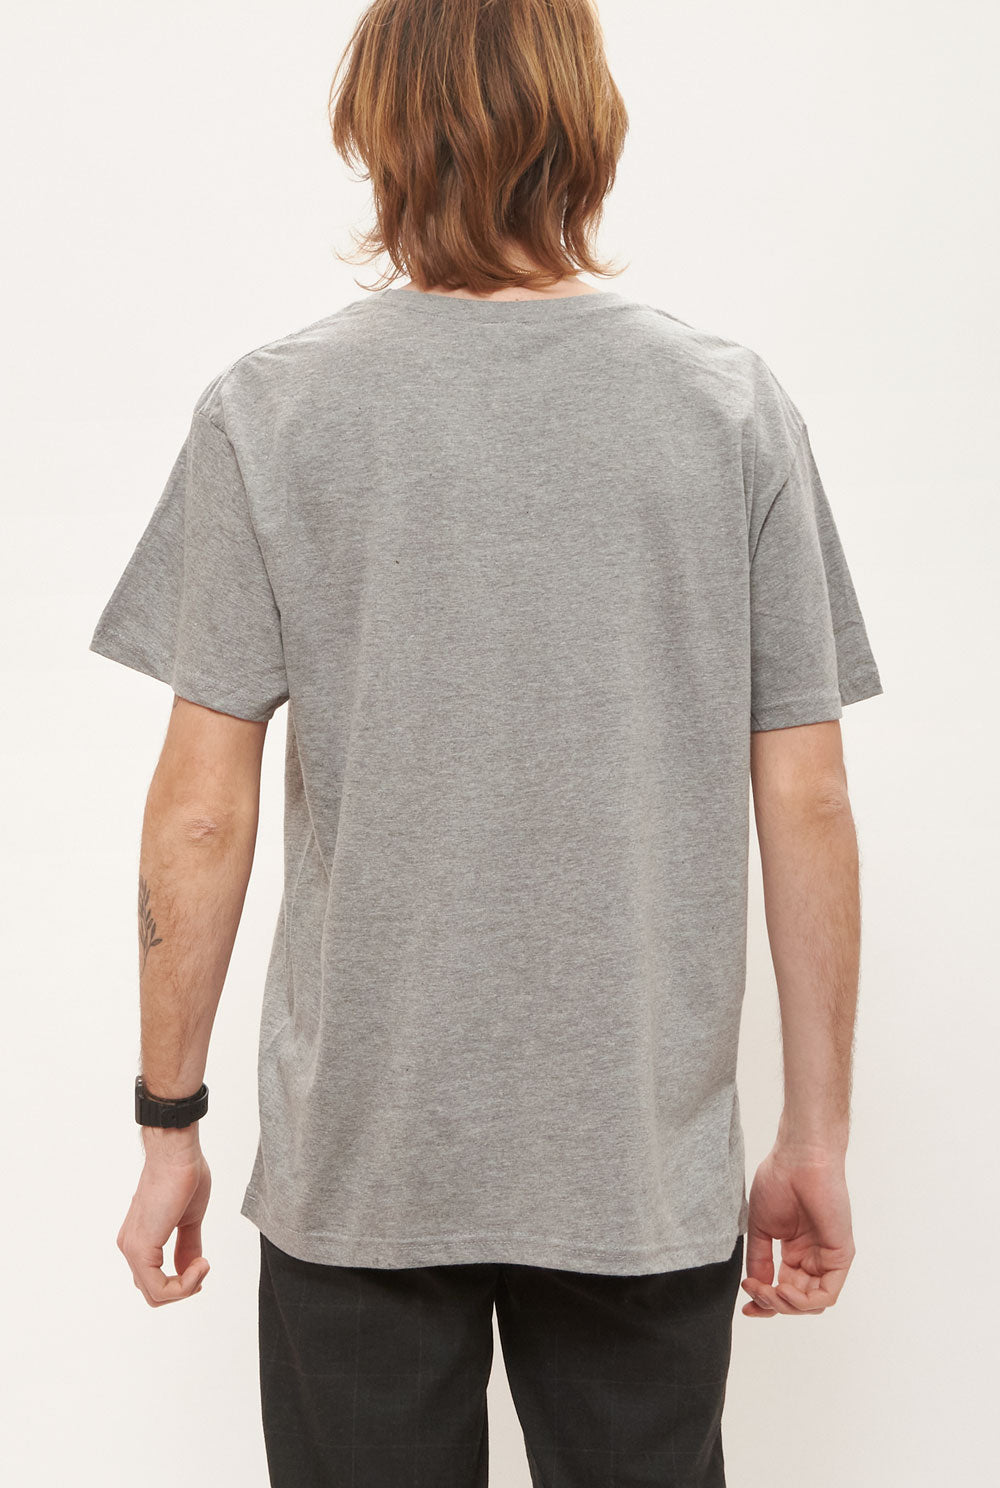 Camiseta Fascinante gris EXCLUSIVE - Pre Order Duyos 